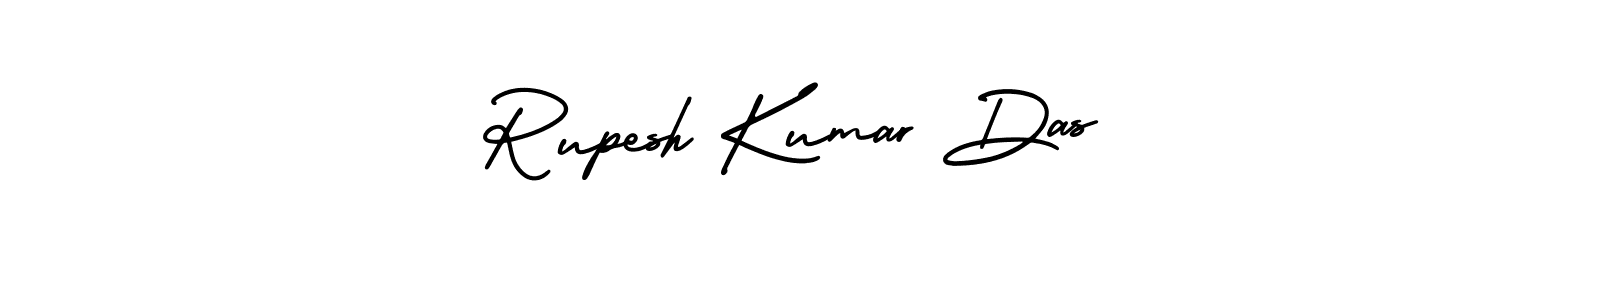 76+ Rupesh Kumar Das Name Signature Style Ideas | Ultimate eSign